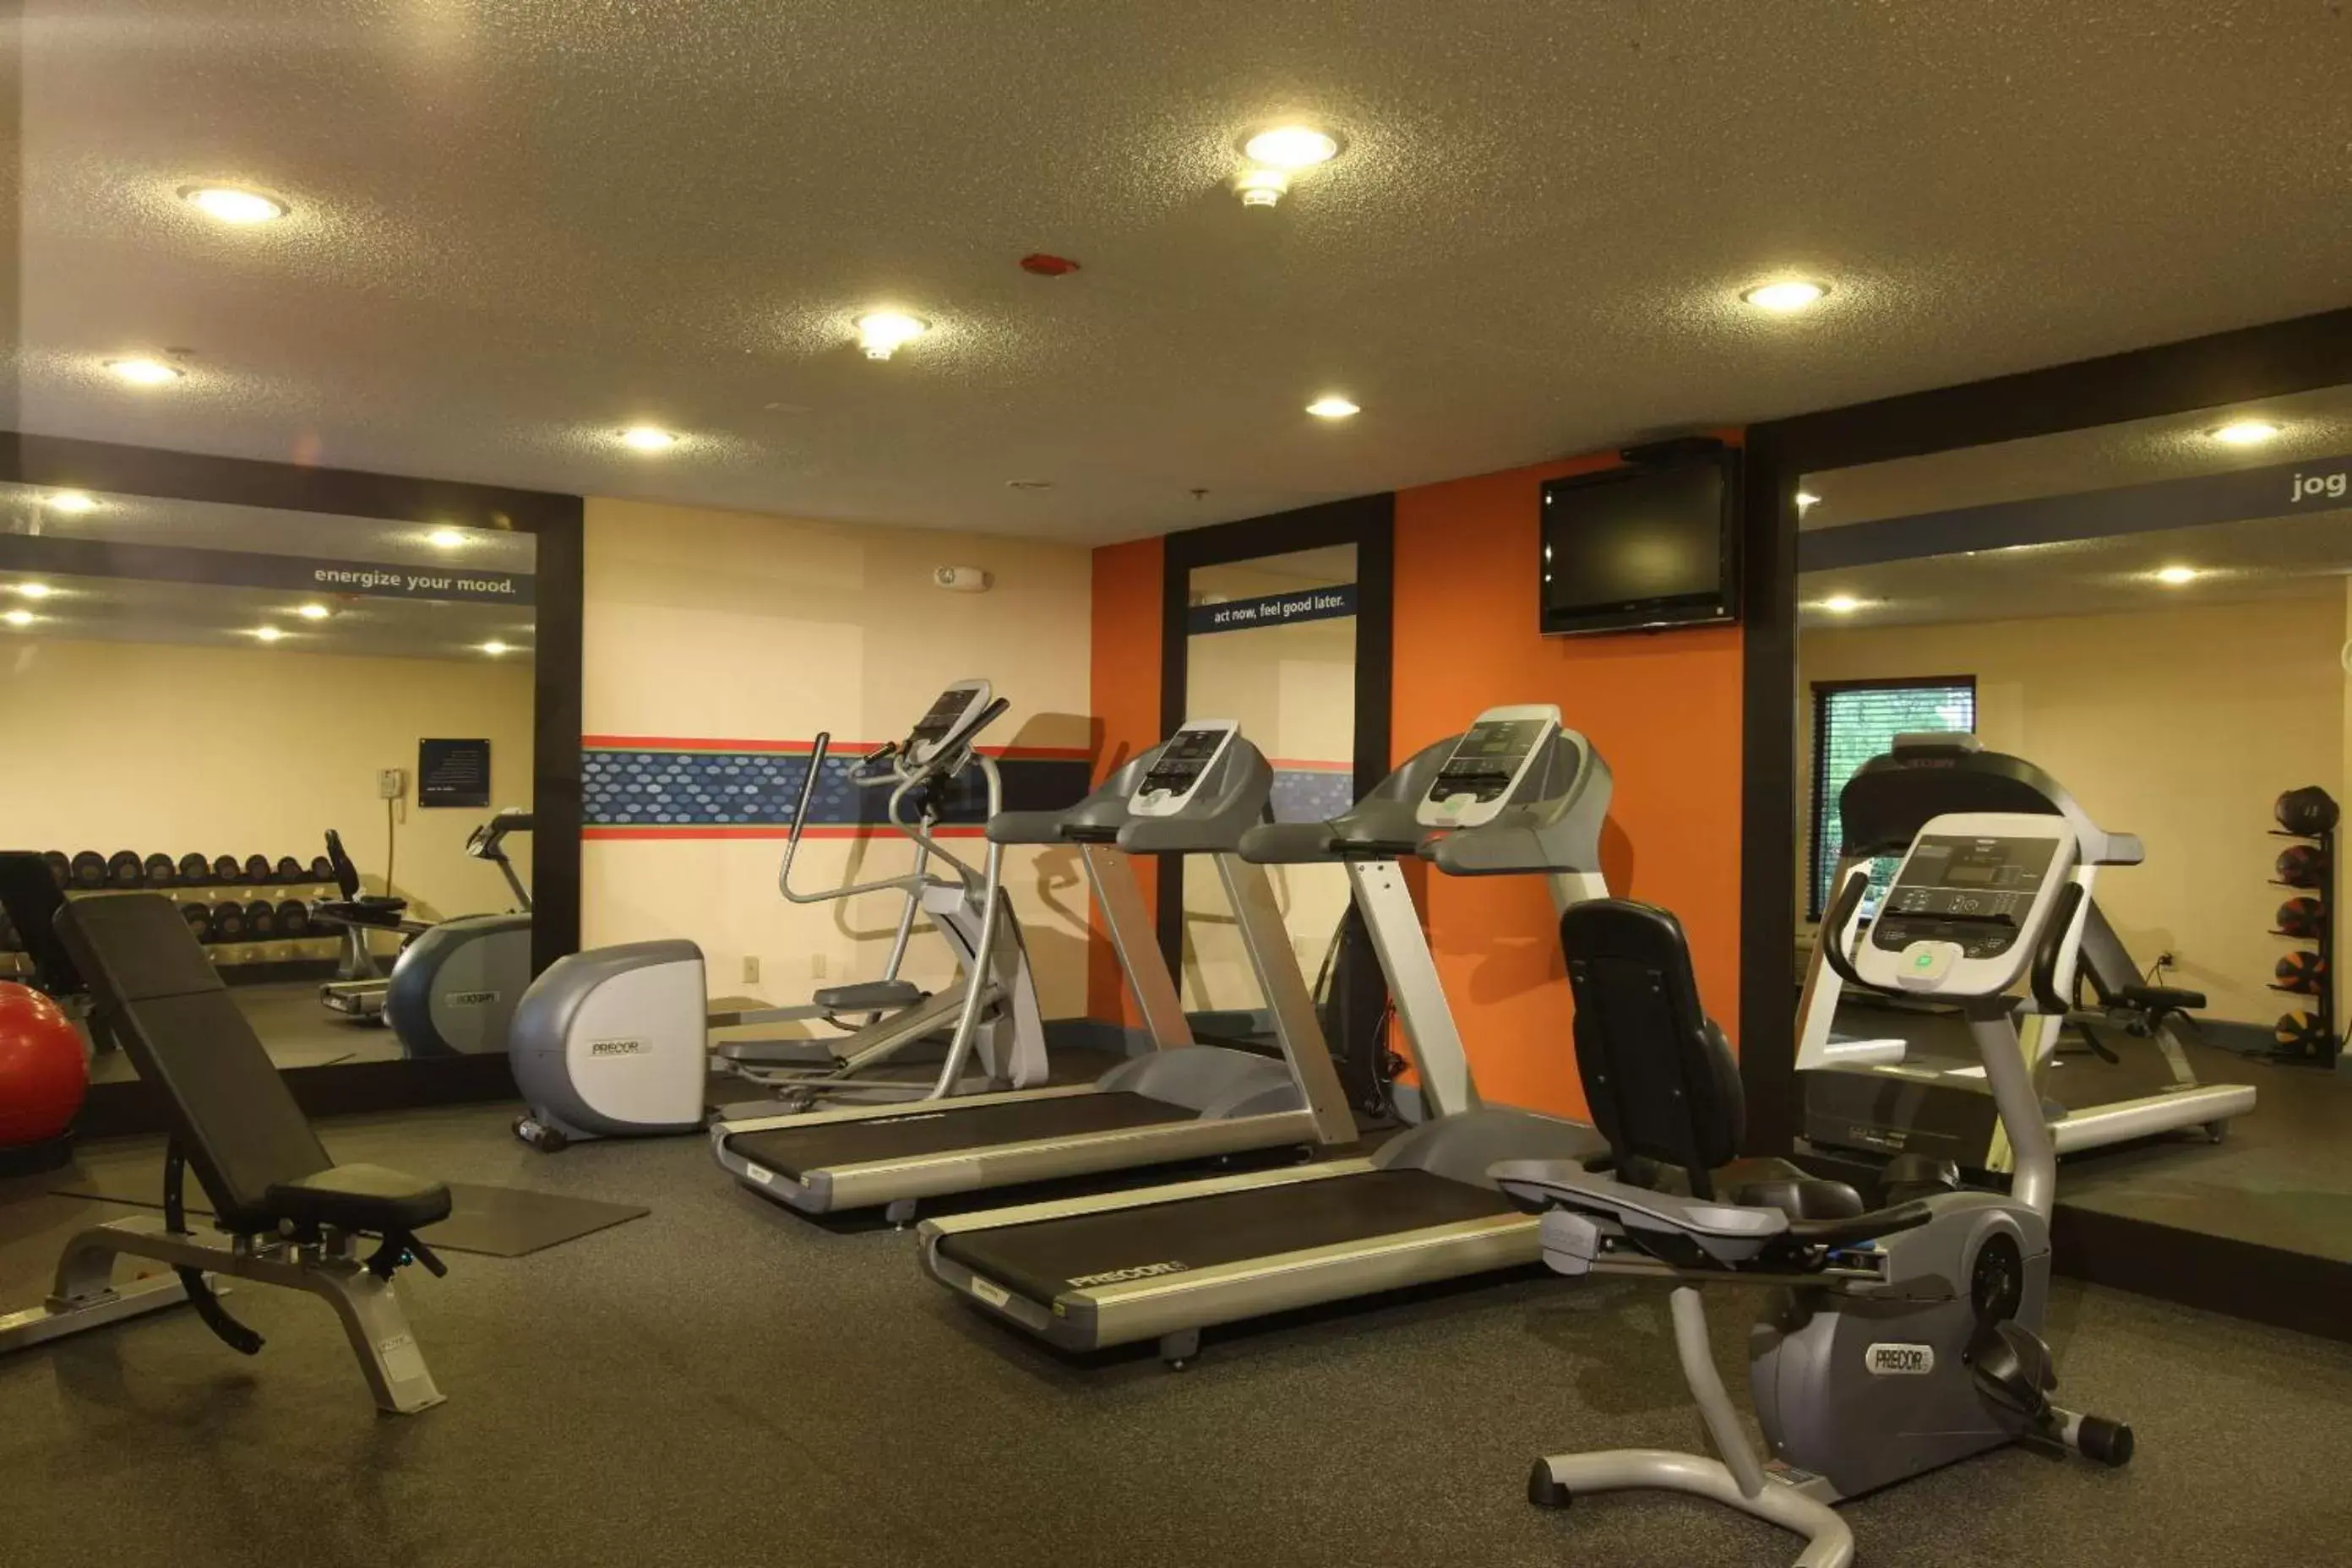 Fitness centre/facilities, Fitness Center/Facilities in Hampton Inn Pennsville